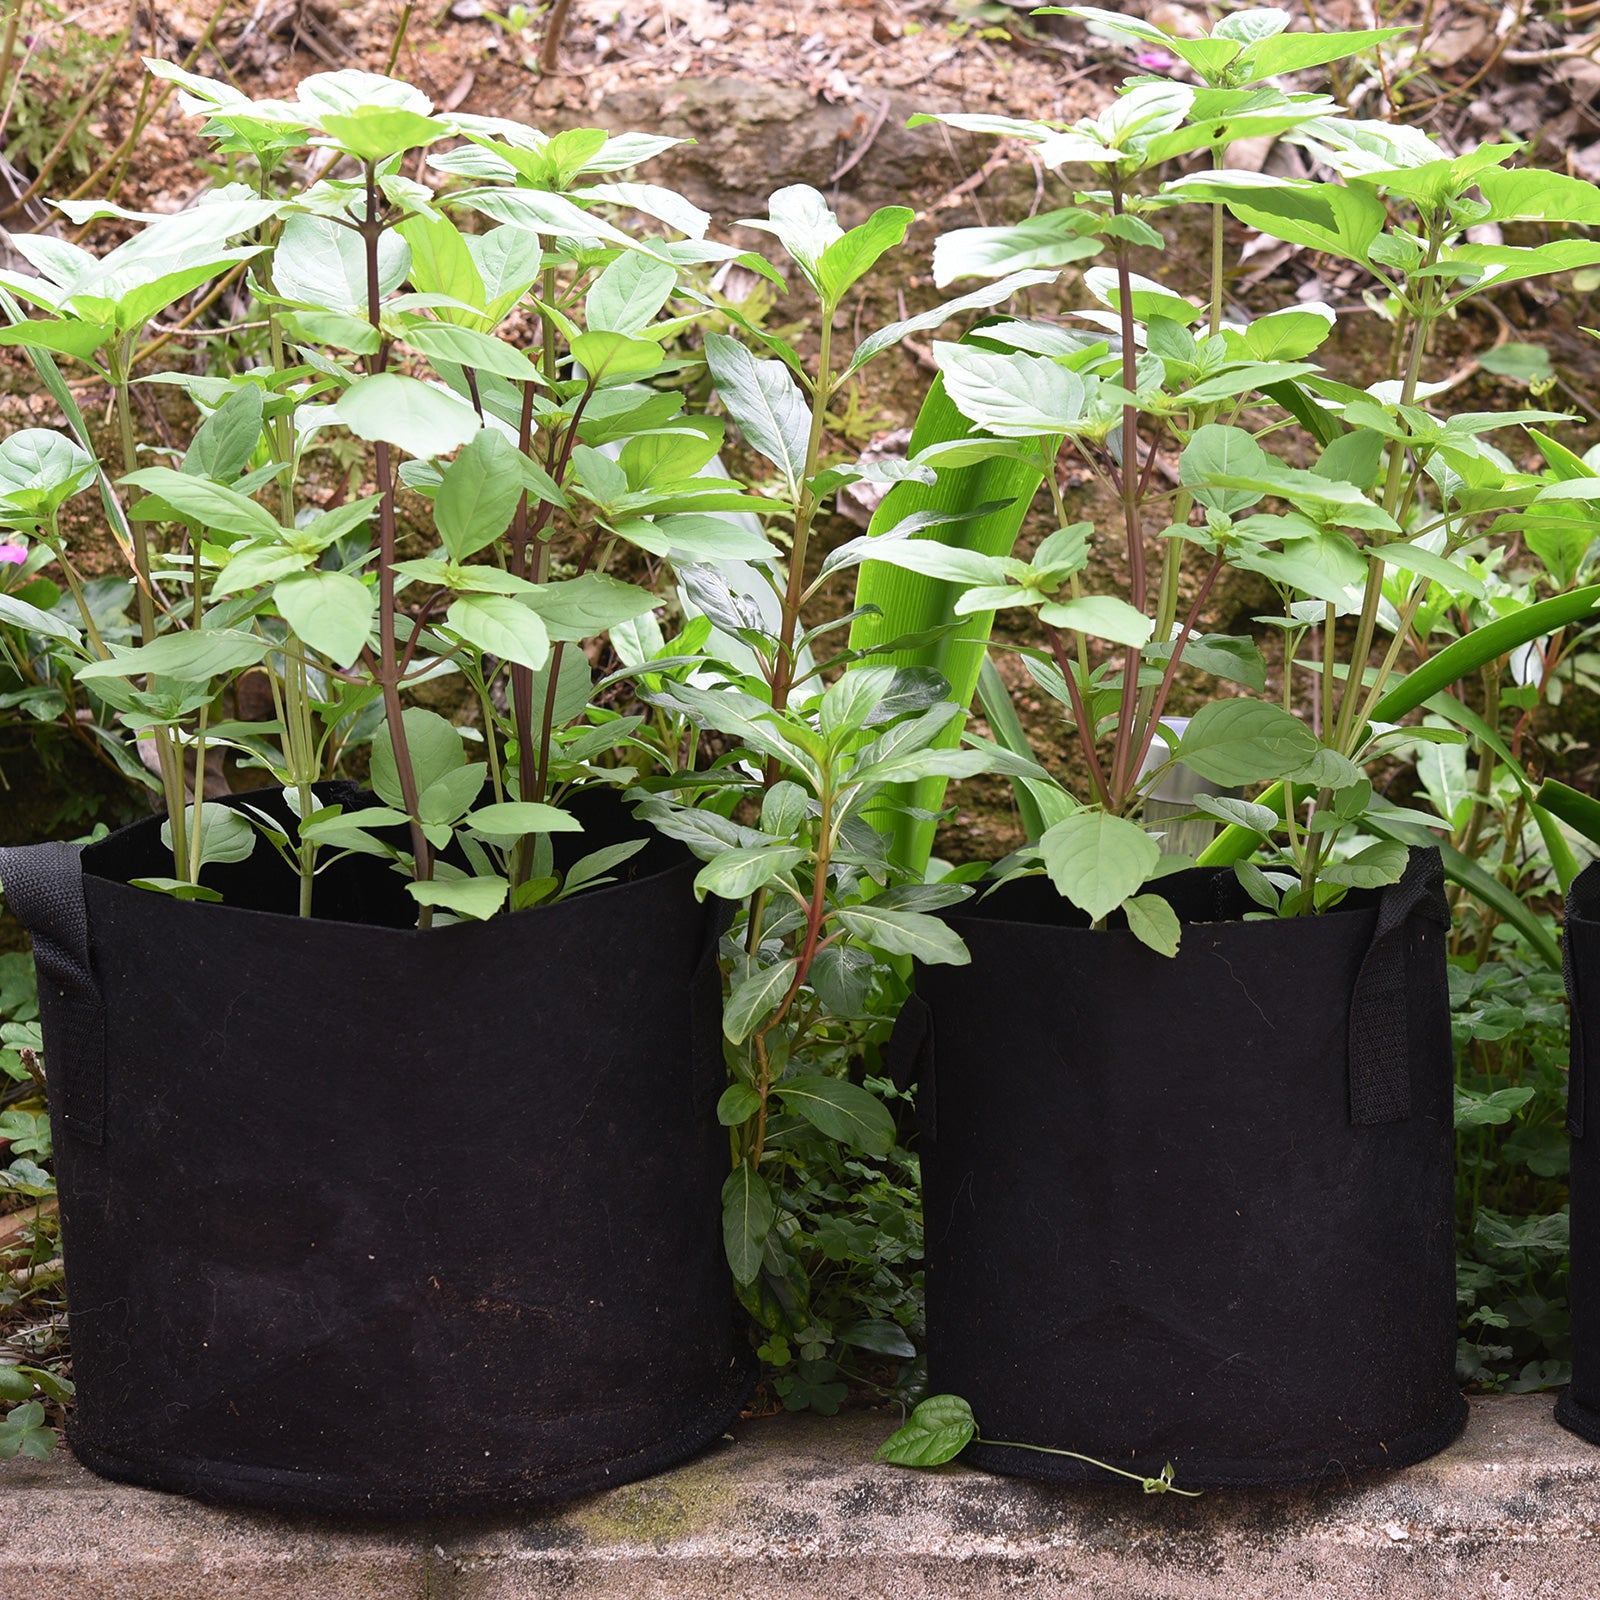 Plant Grow Bag/ Aeration Fabric Pot W/handles Garden Vegetables